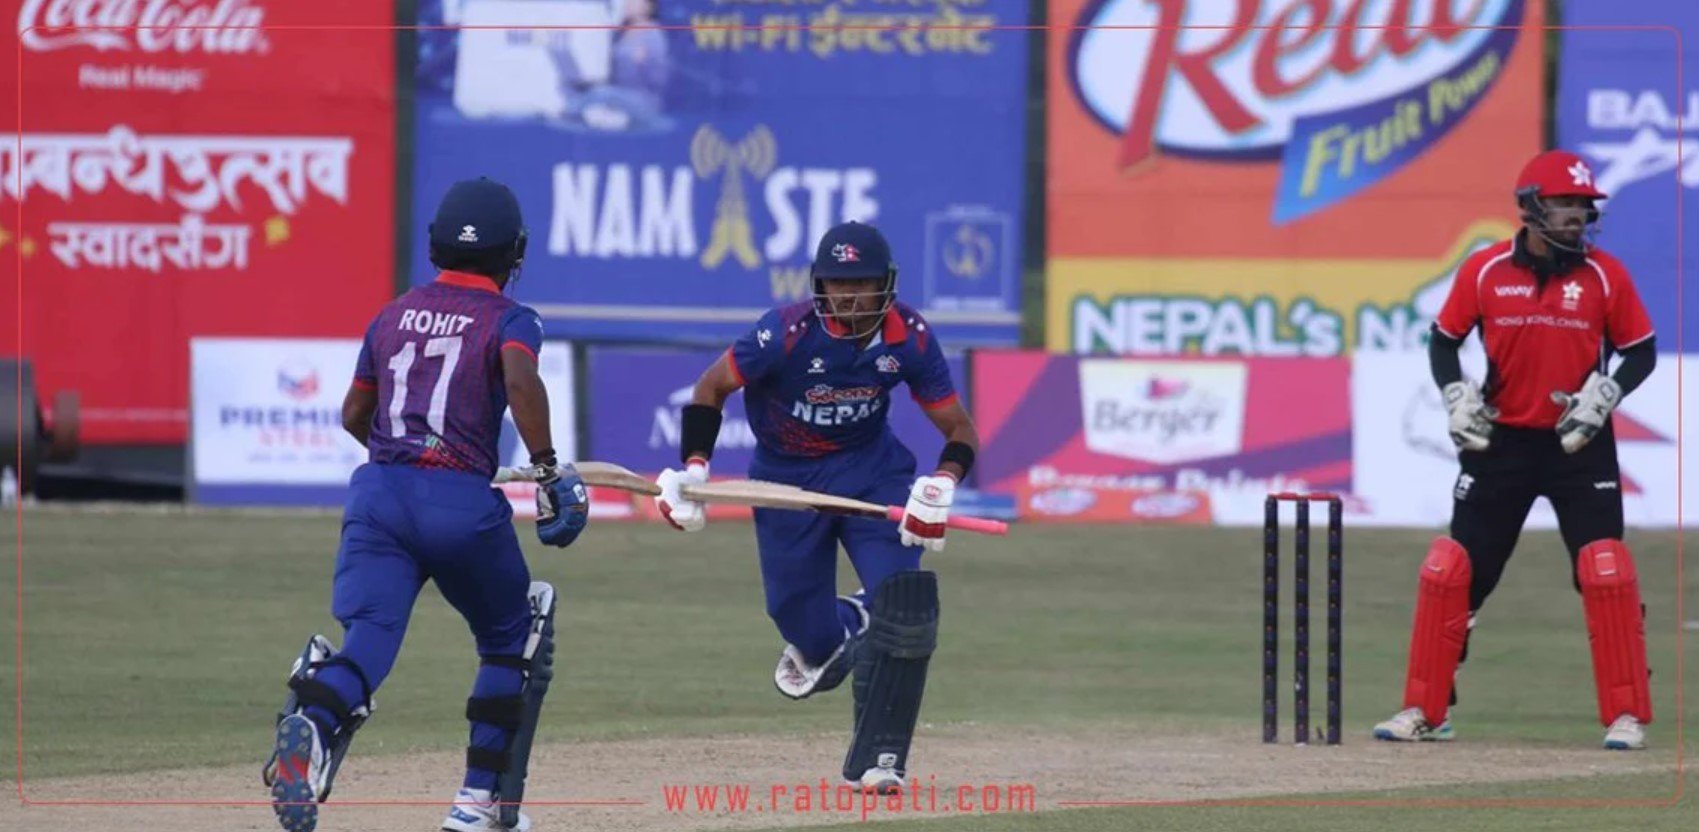 Nepal defeats Hong Kong by 6 wickets